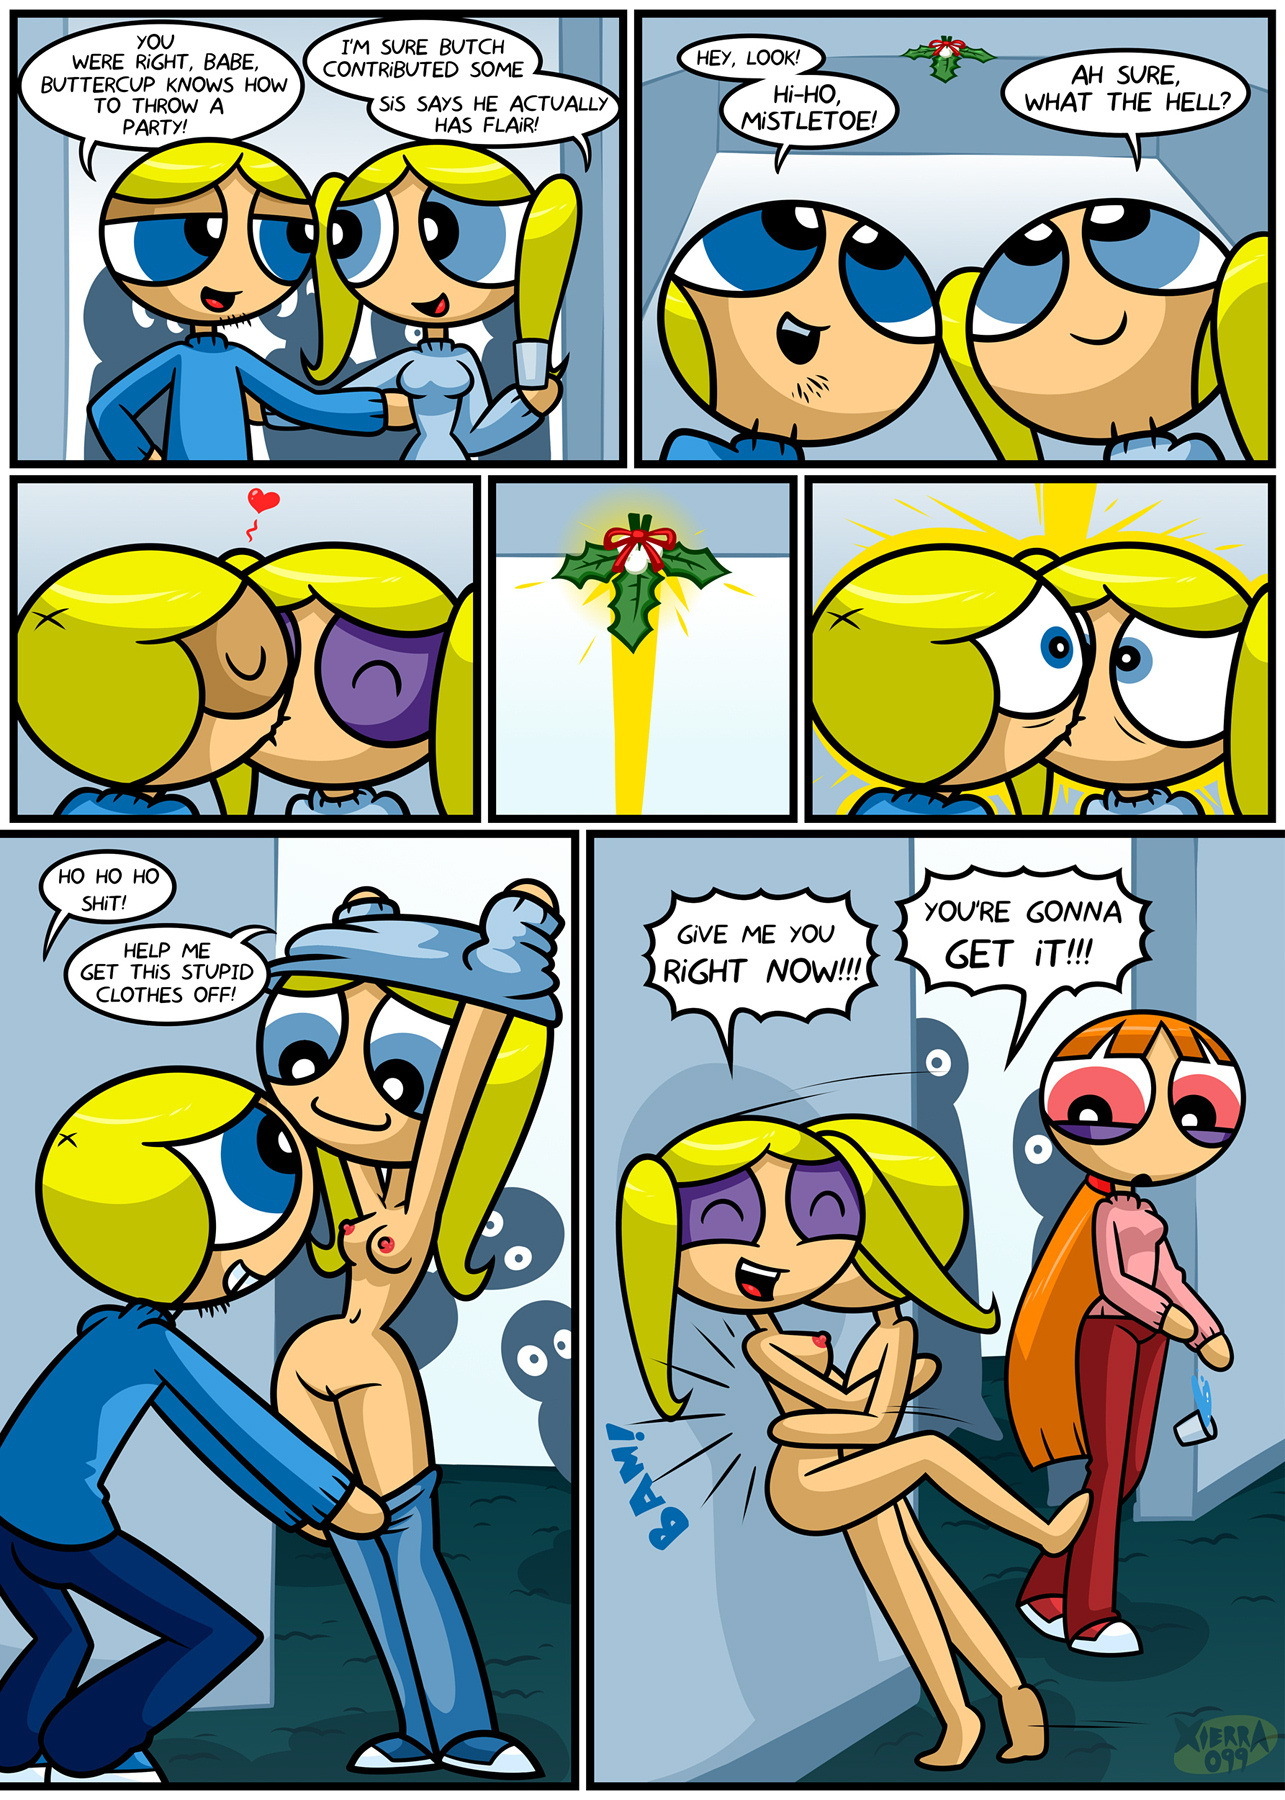 Hi-Ho Mistletoe! - Page 2